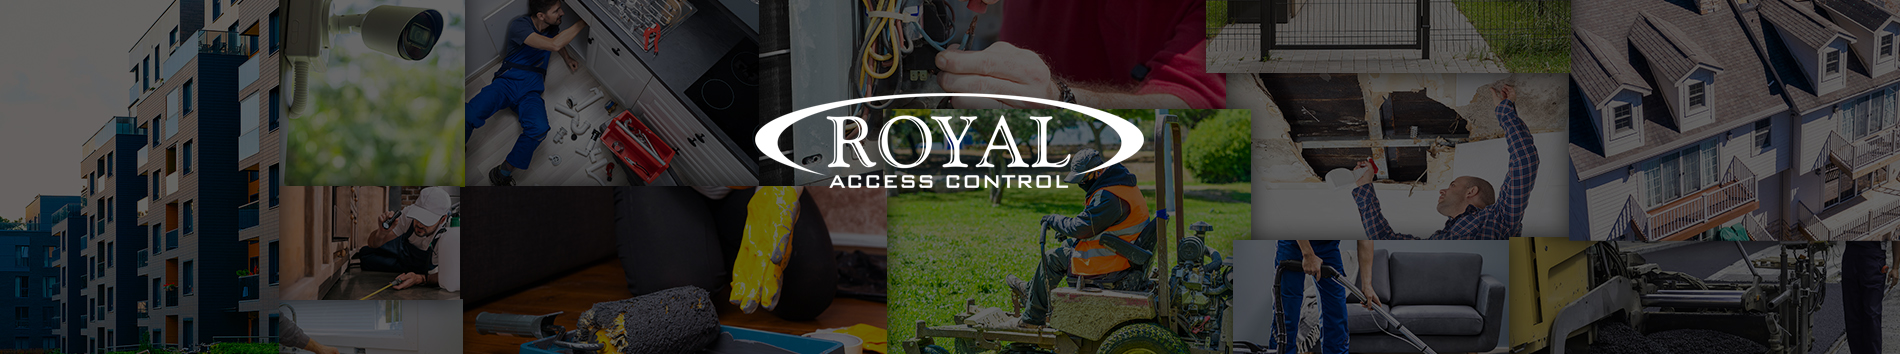 Royal Access Control